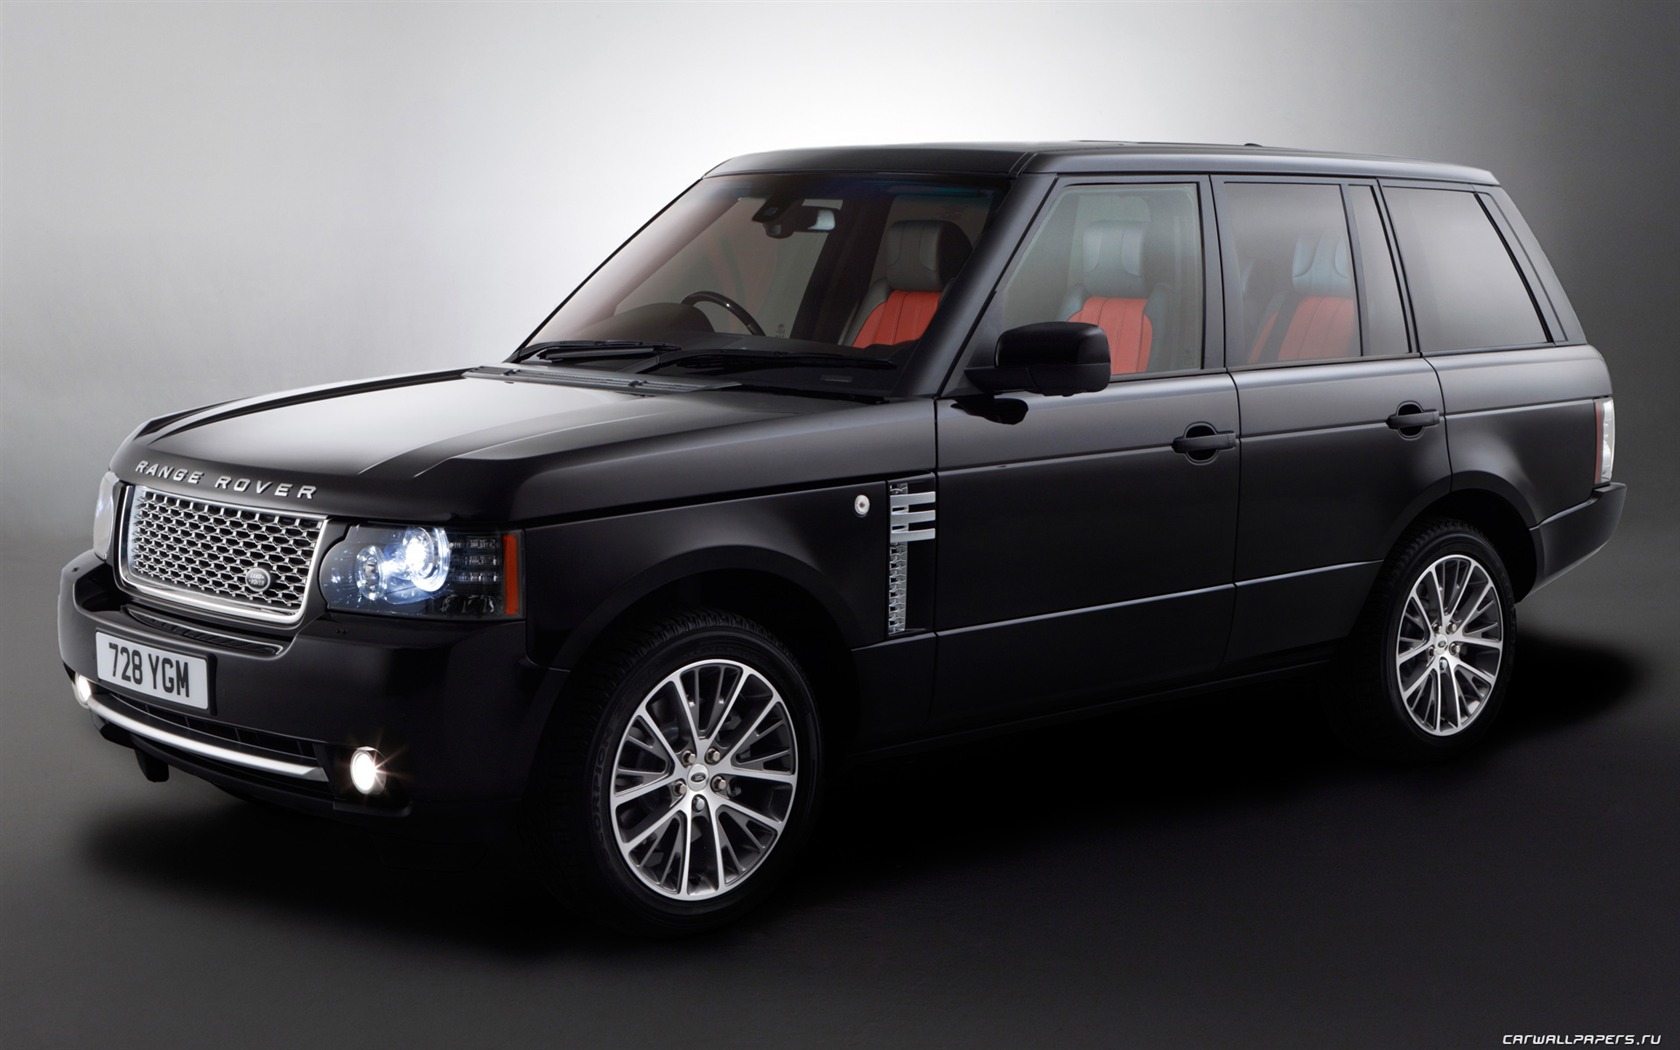 Land Rover Range Rover Black Edition - 2011 路虎18 - 1680x1050